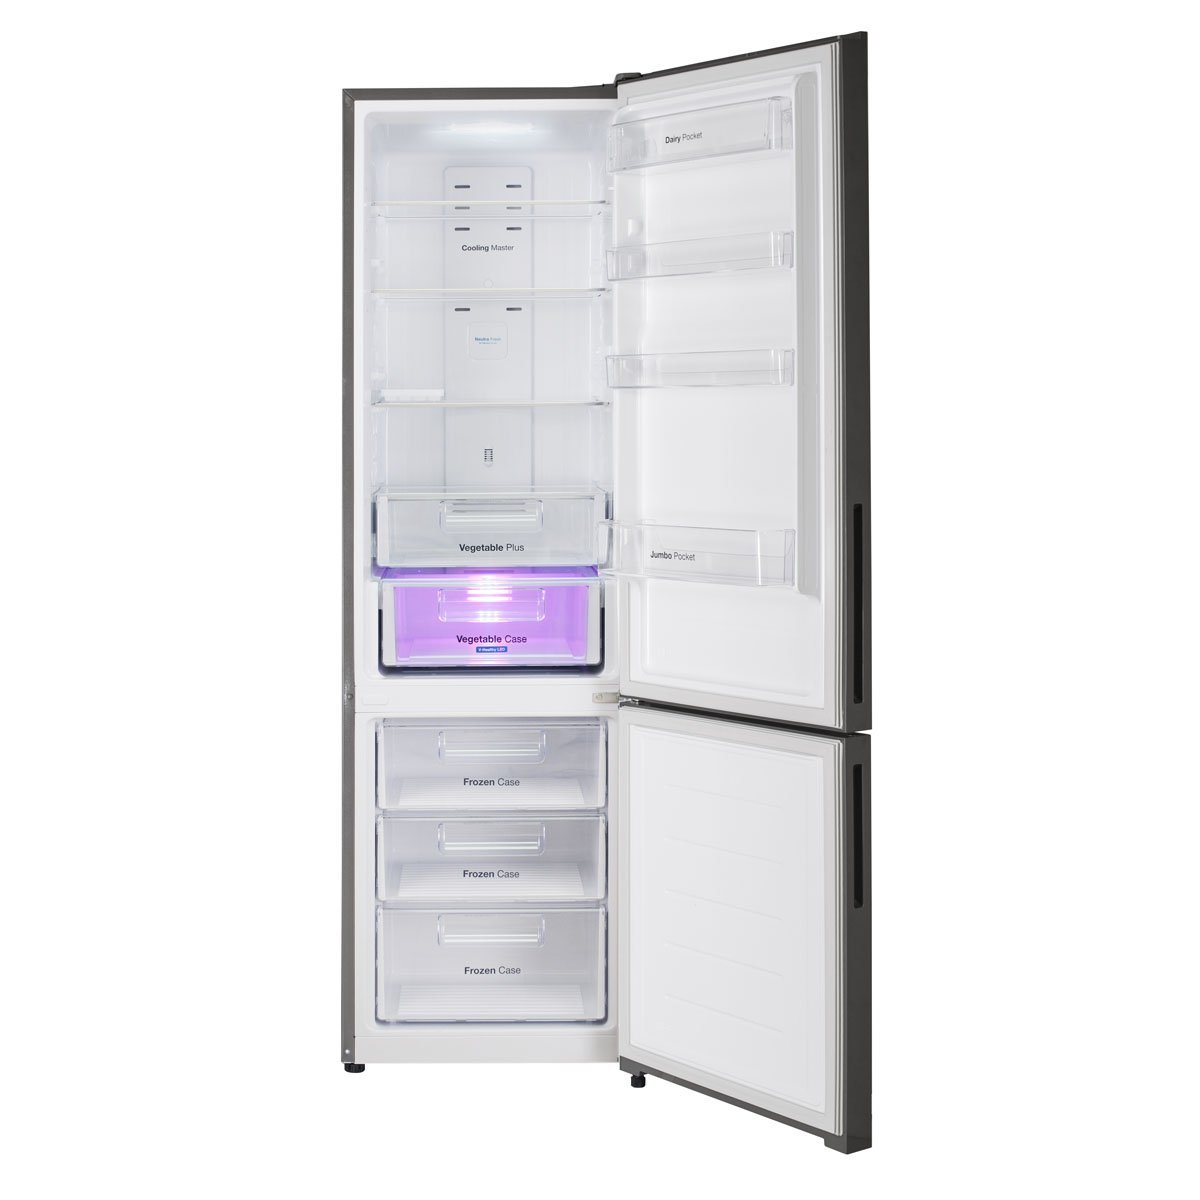 Refrigerador Daewoo Button 13Pies Rct-360Nsg Silver